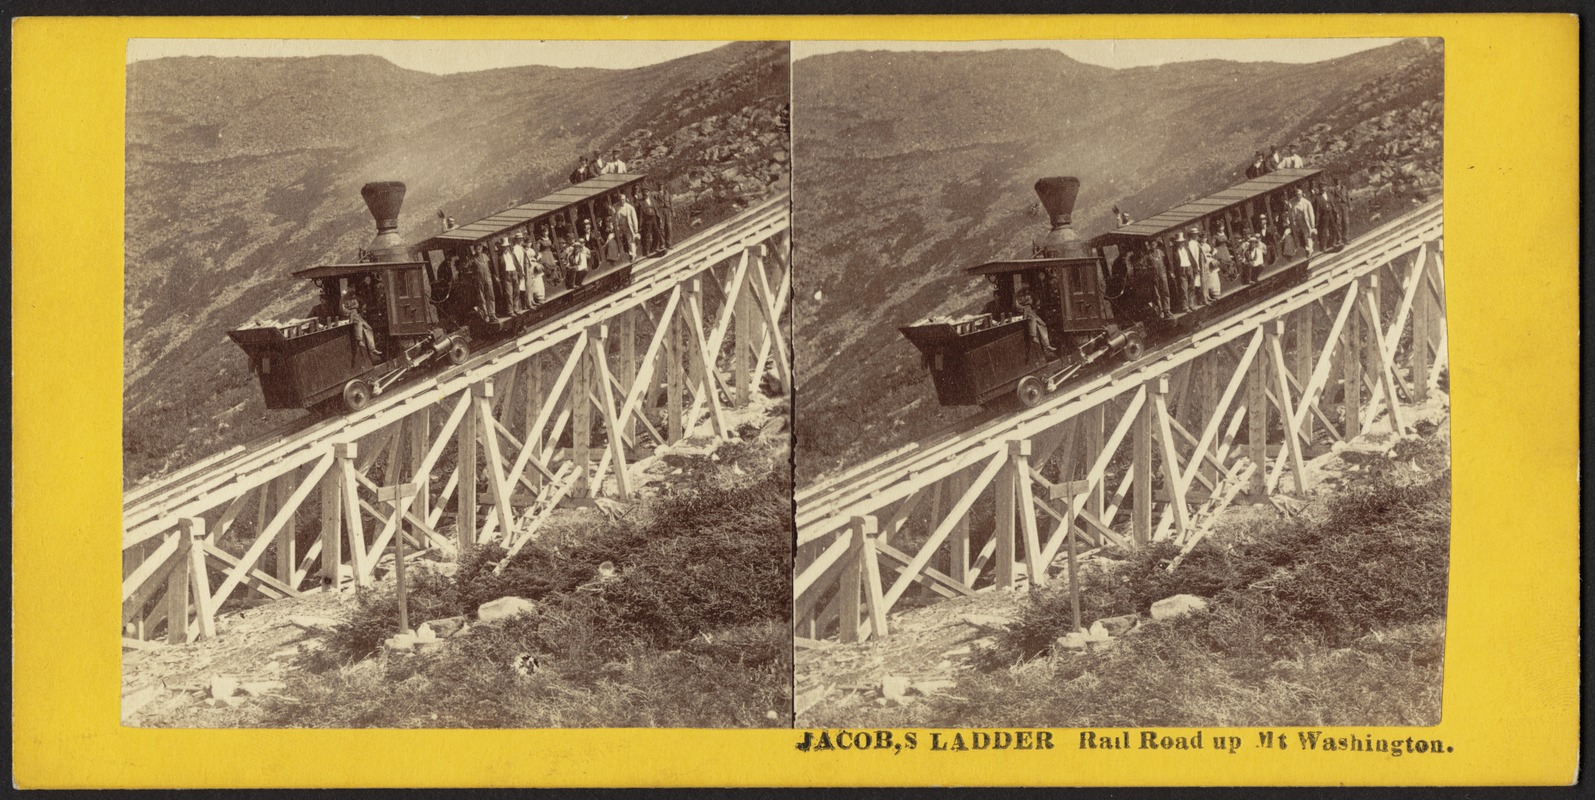 Jacob,s ladder. Rail road up Mt. Washington